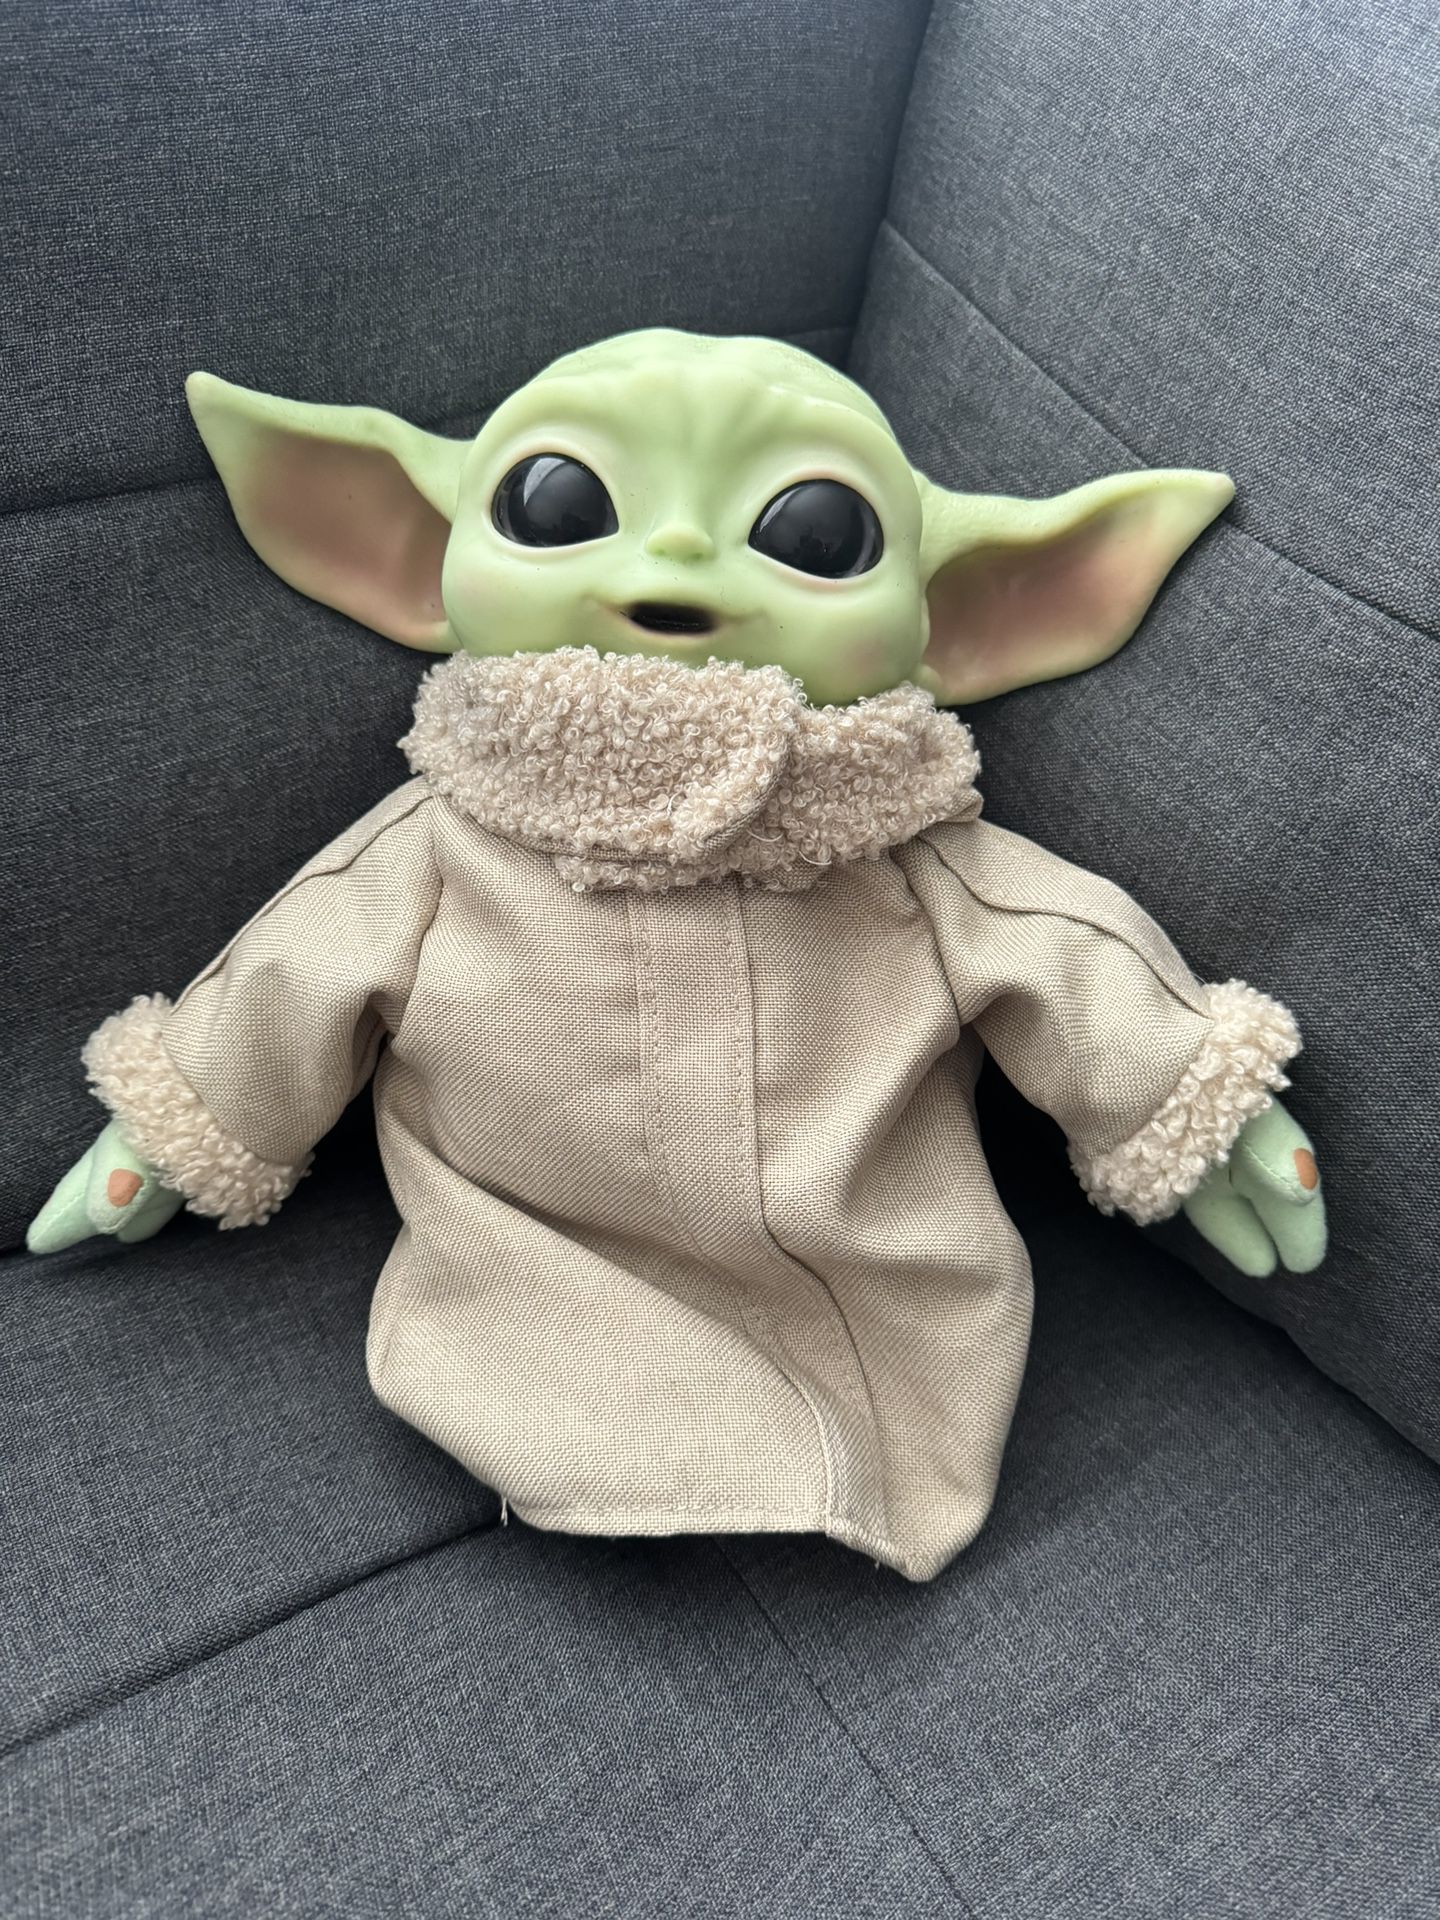 Star Wars Mandalorian Baby Yoda Grogu Toy